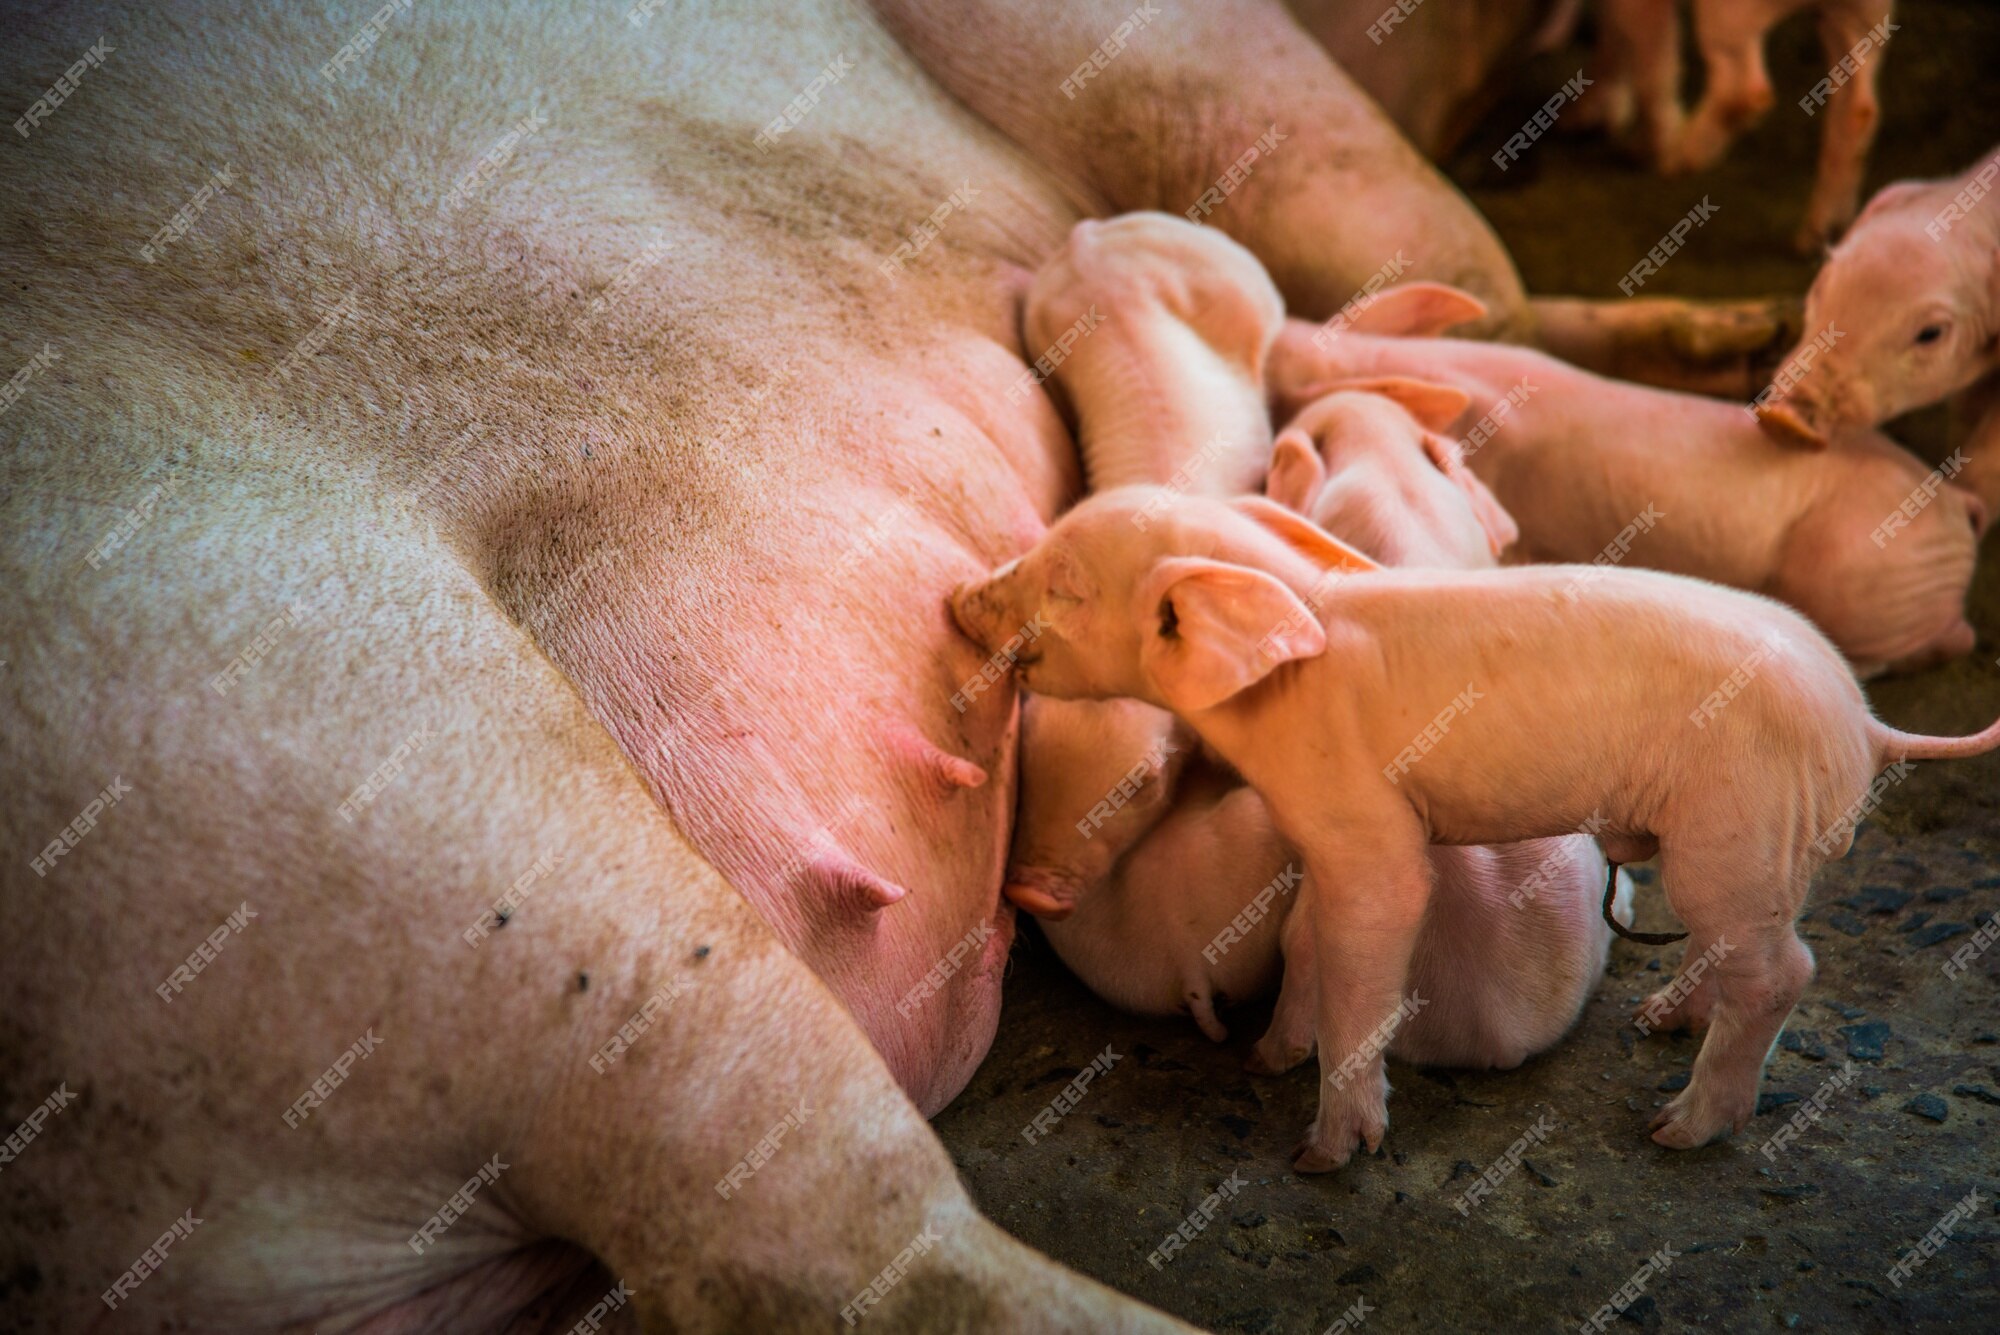 craig bellerose ocasey recommends Woman Breastfeeding Baby Pigs